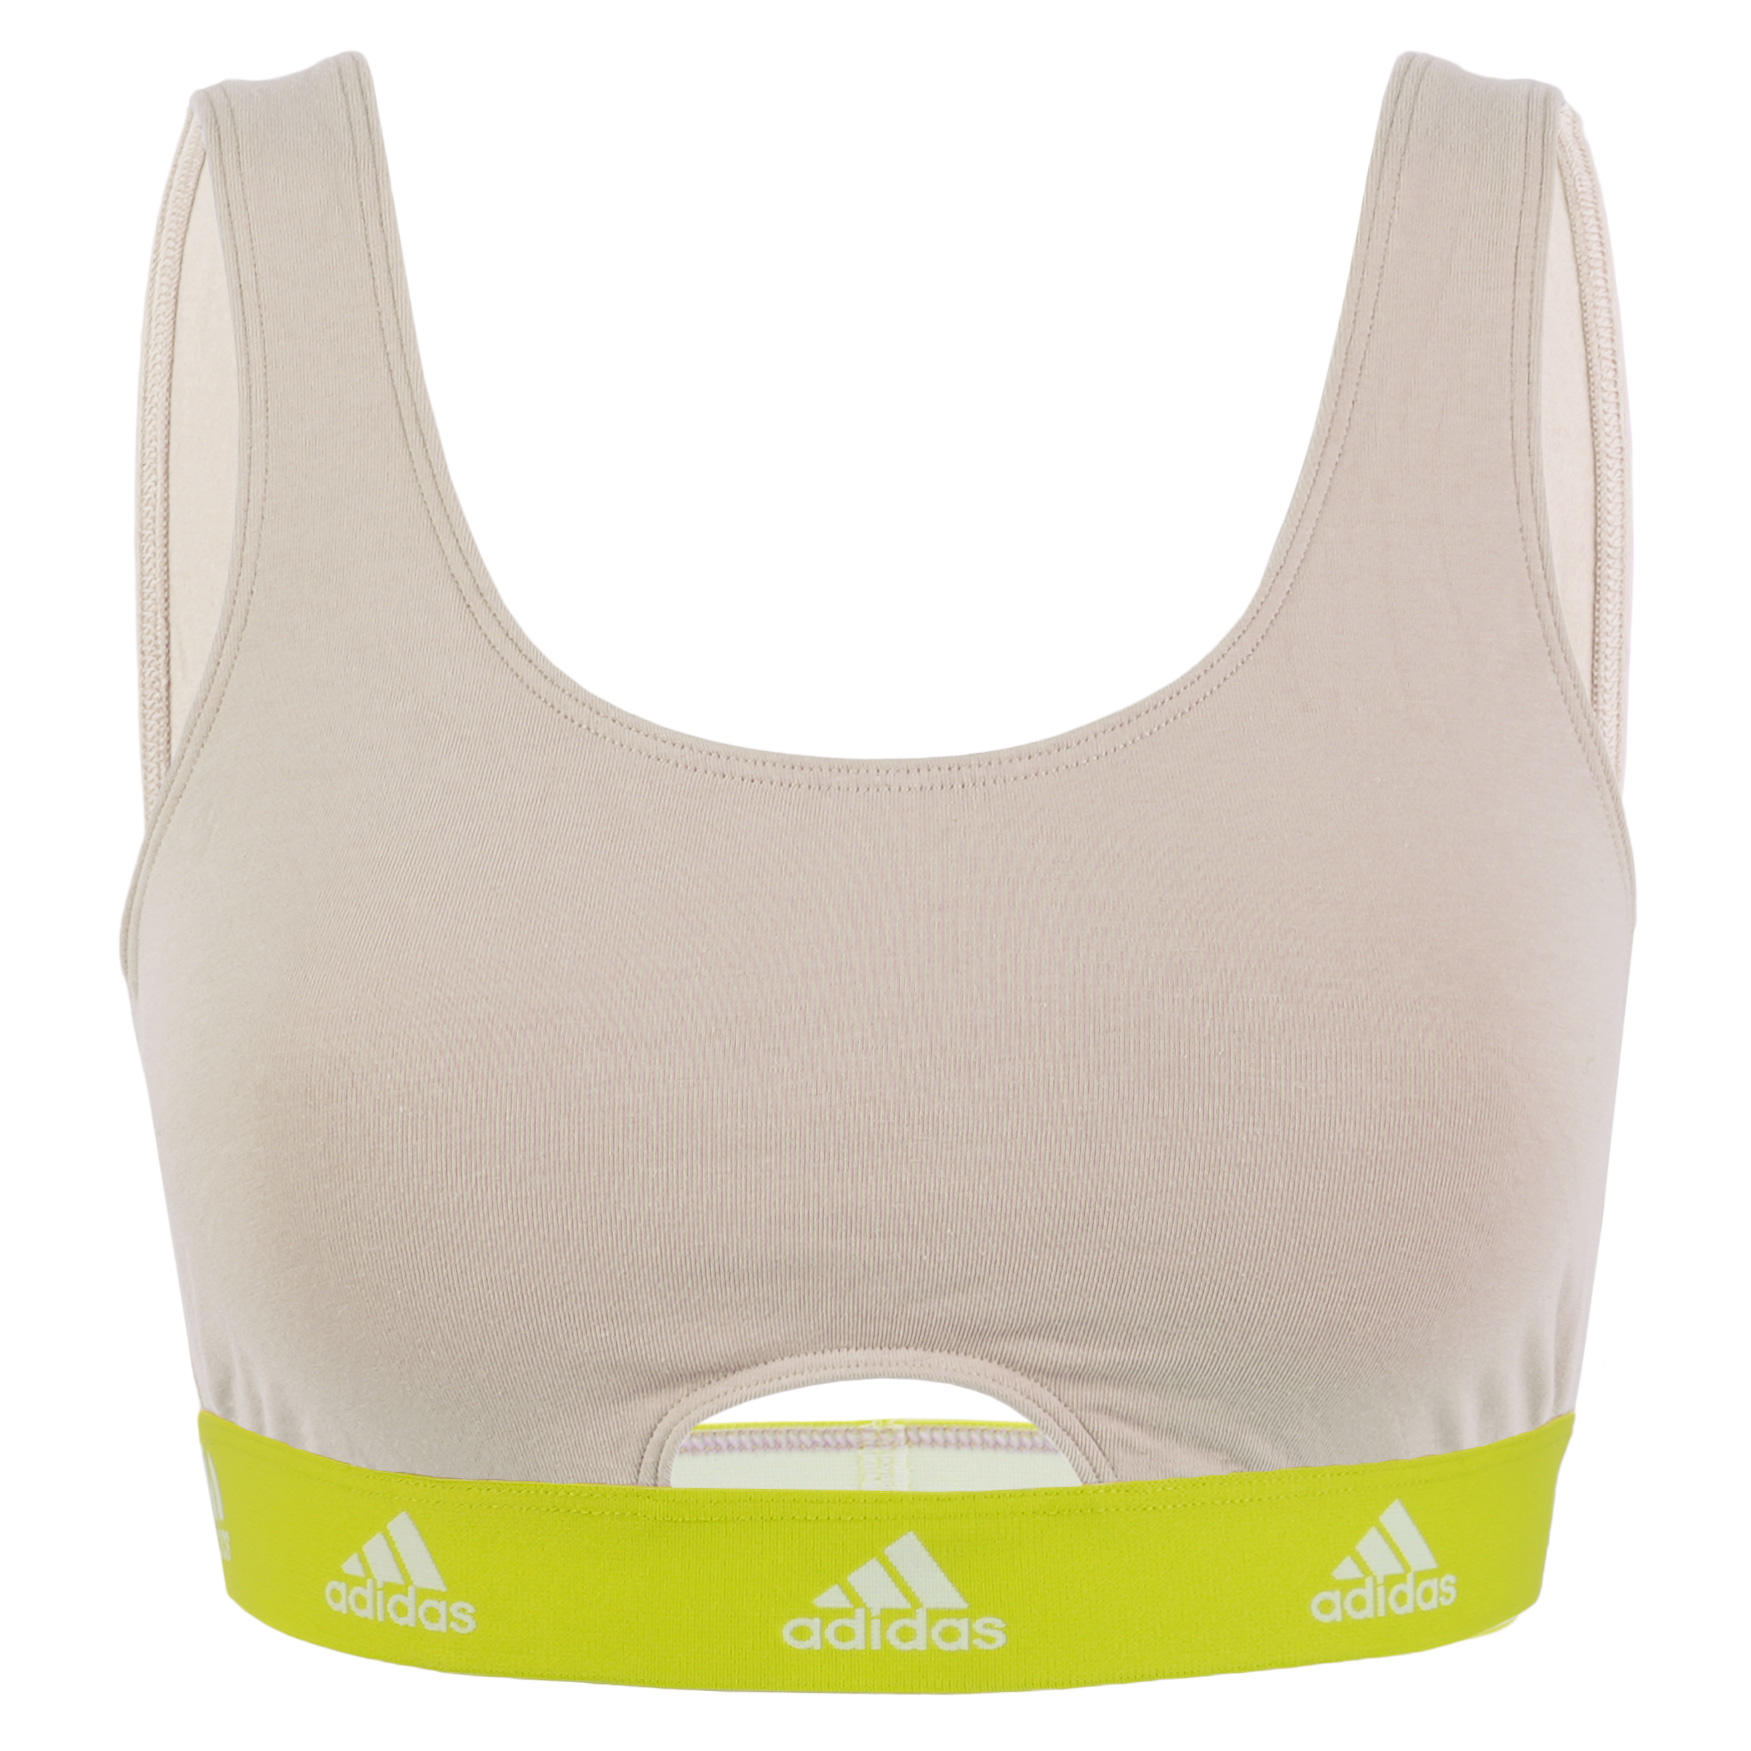 Productfoto van adidas Sports Underwear Scoop Bralette BH-Top Dames - 409-beige